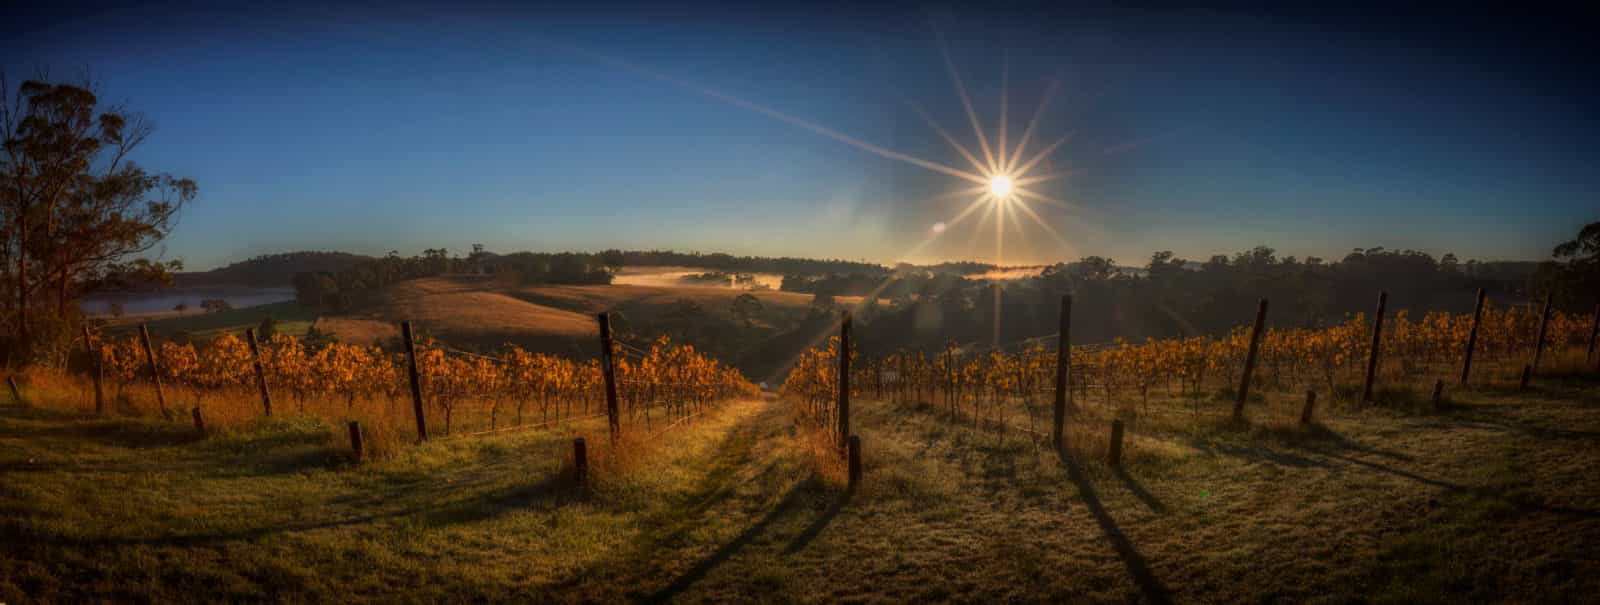 autumn Sunrise over Priory Ridge Vineyard